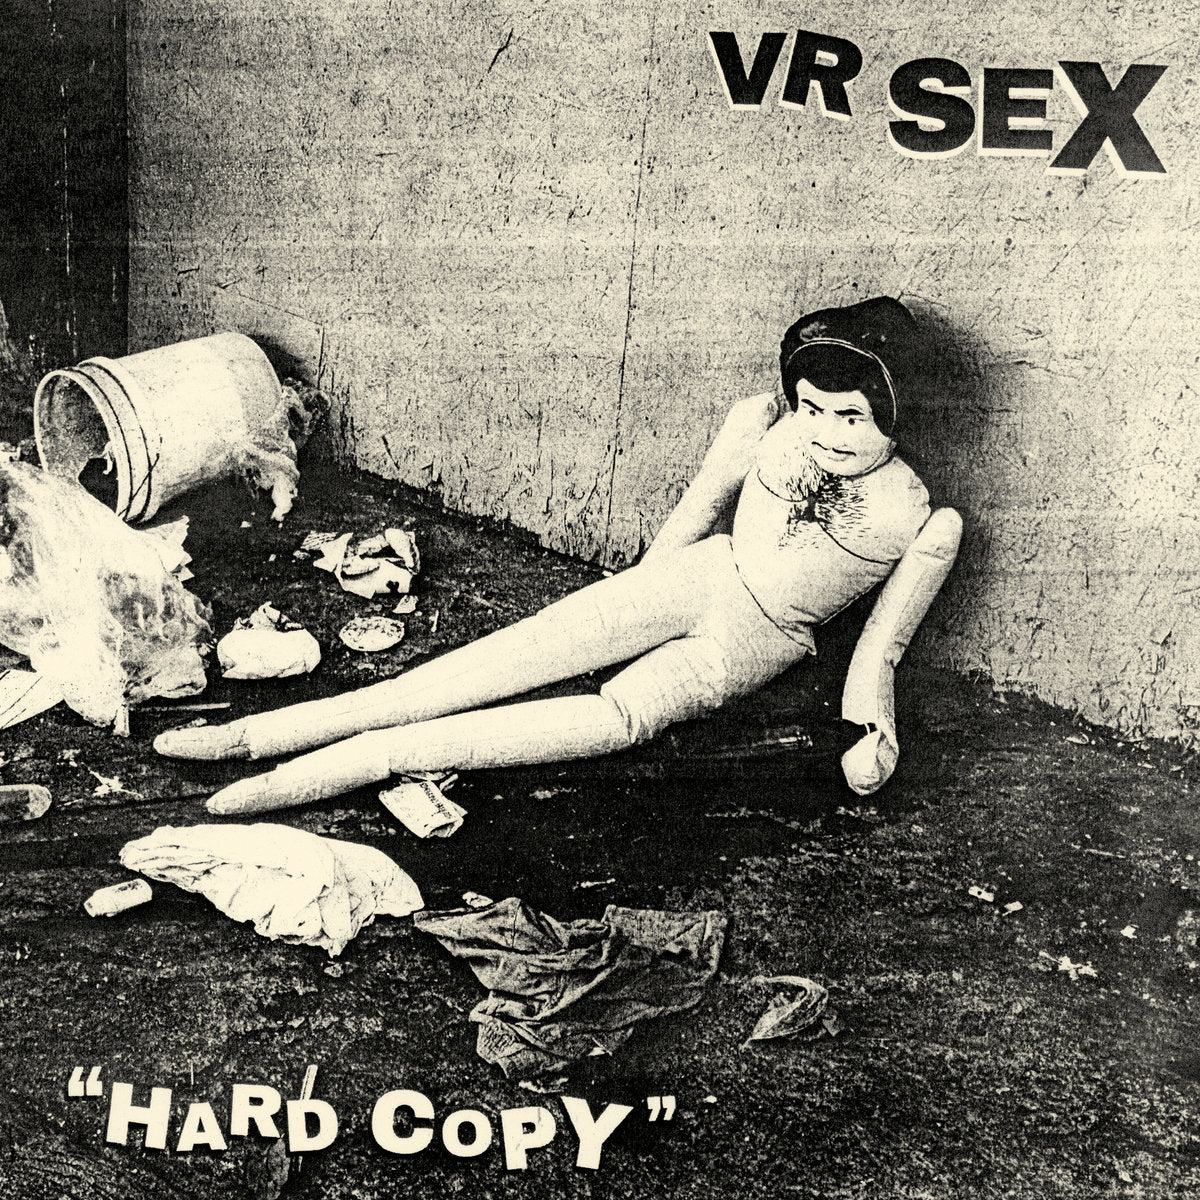 VR SEX "Hard Copy" LP